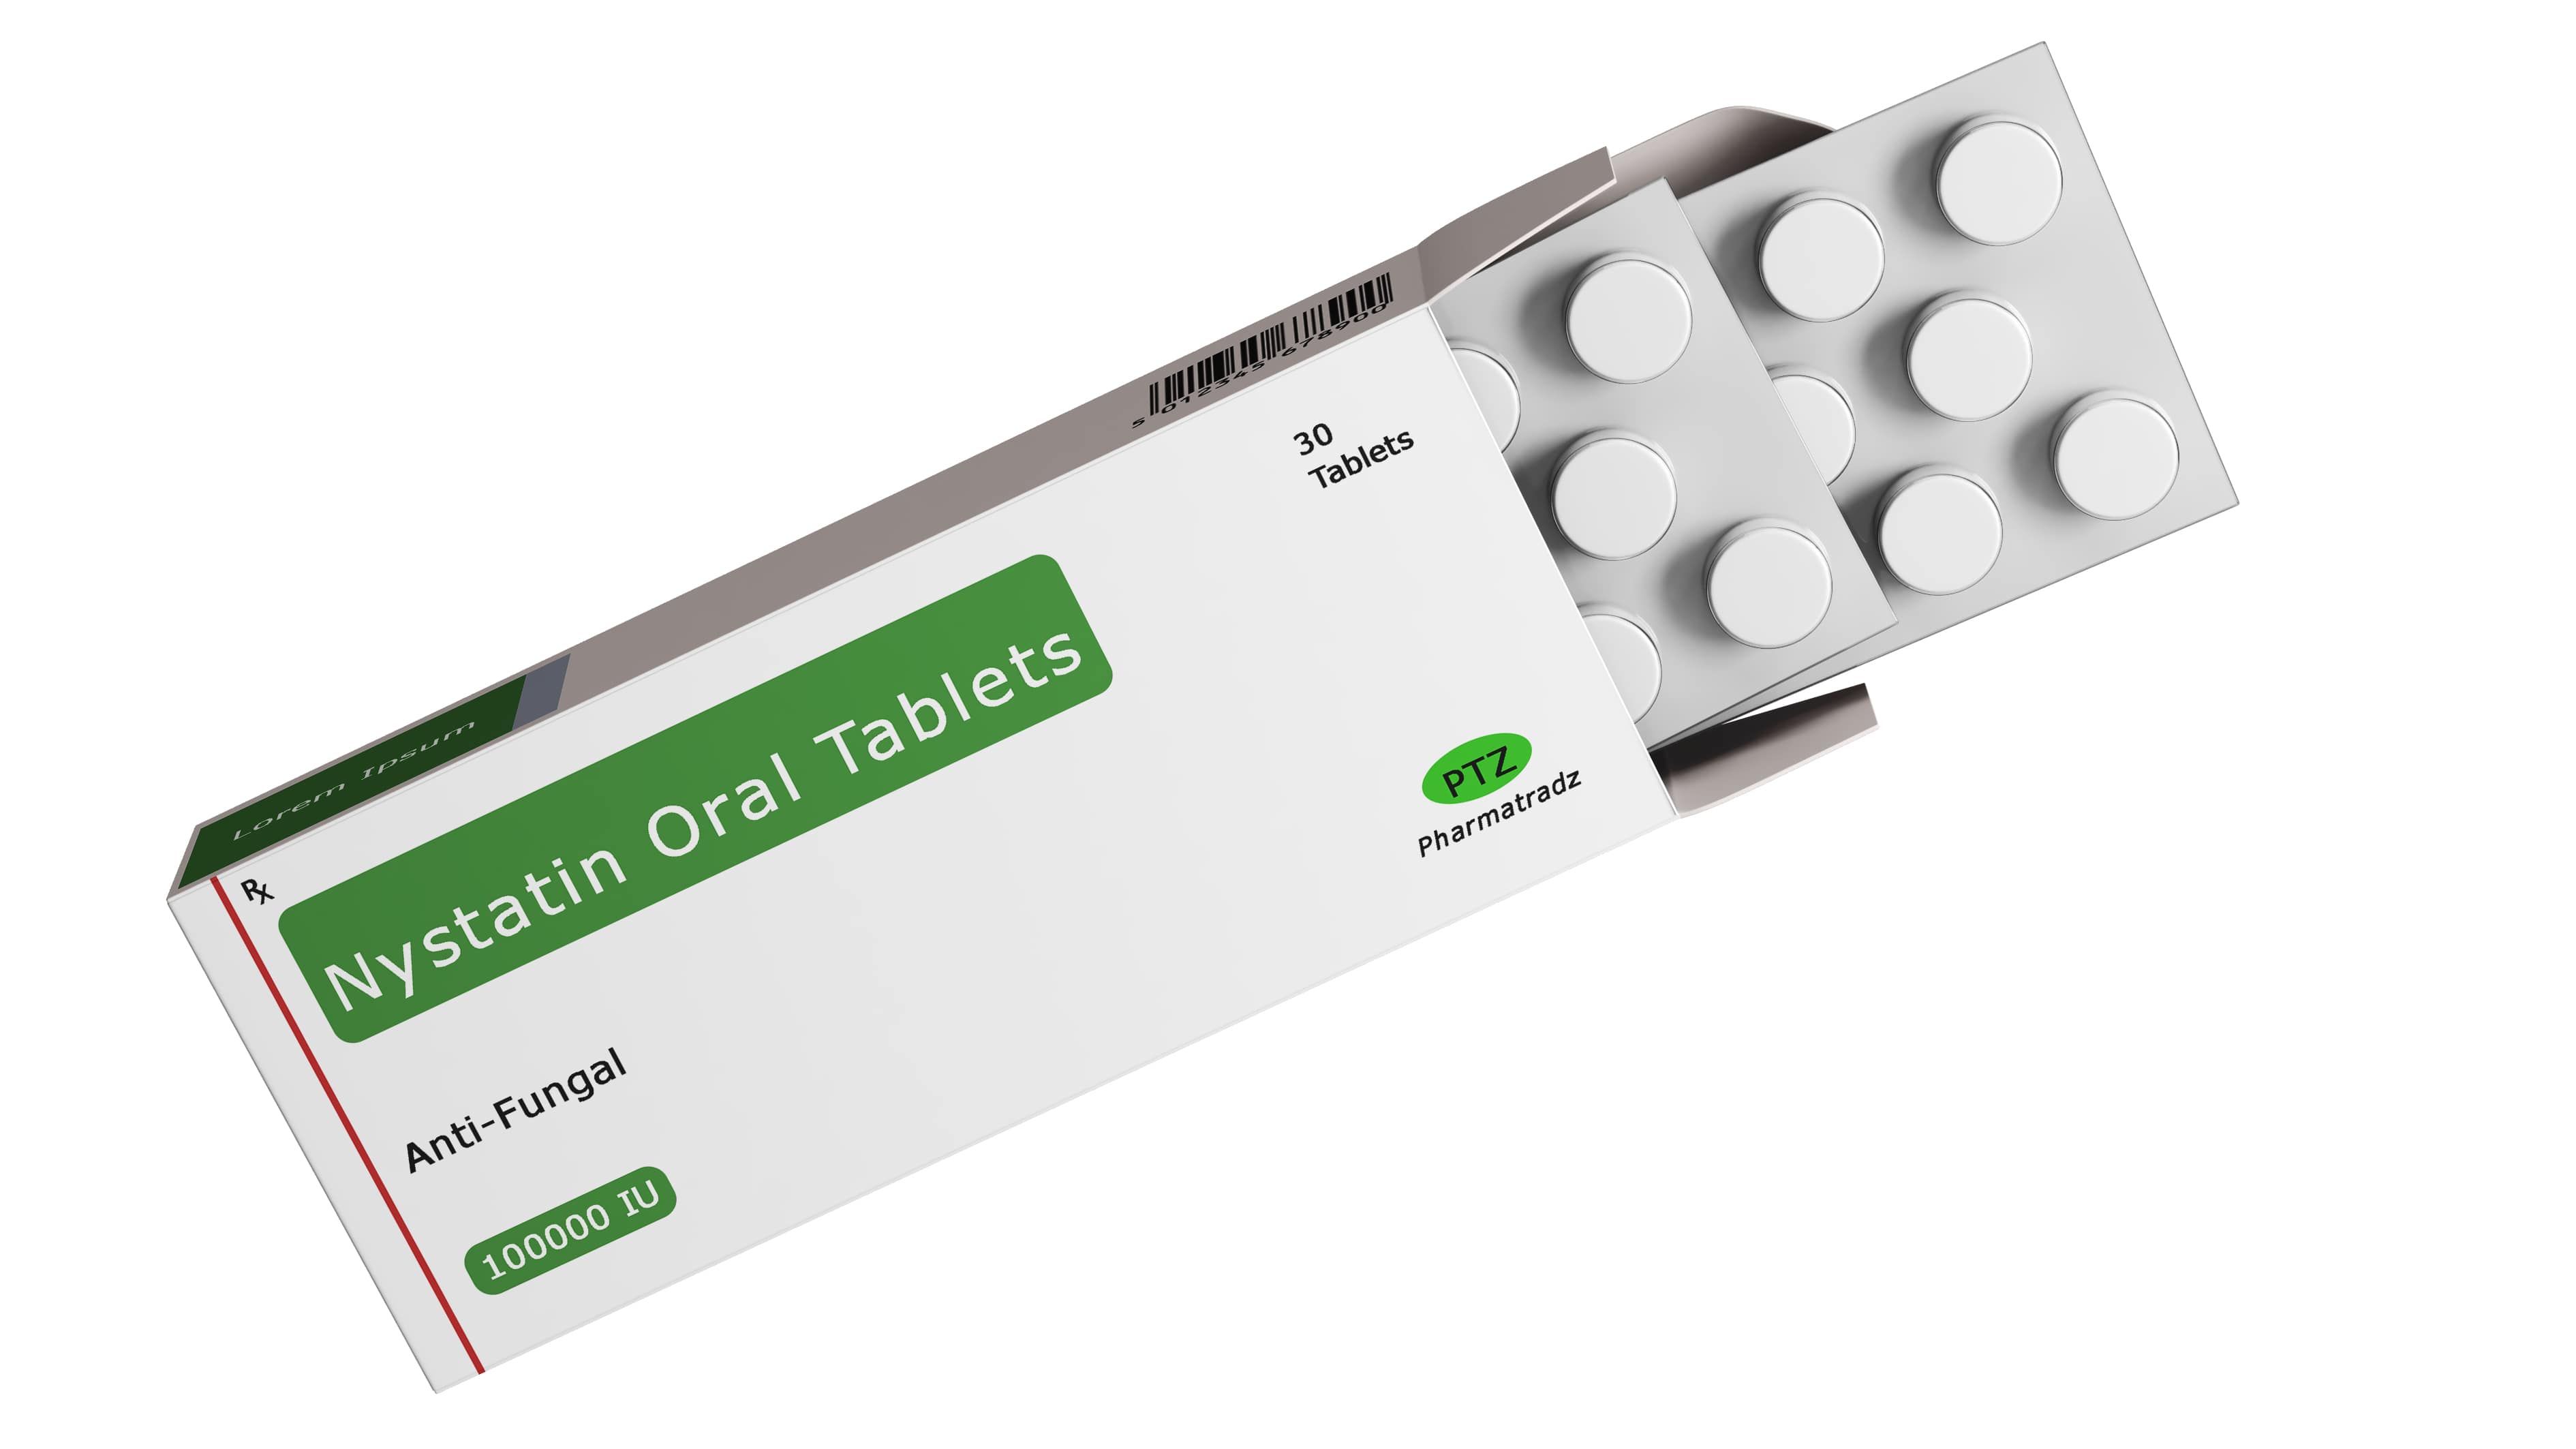 Nystatin Oral Tablets 500,000 IU